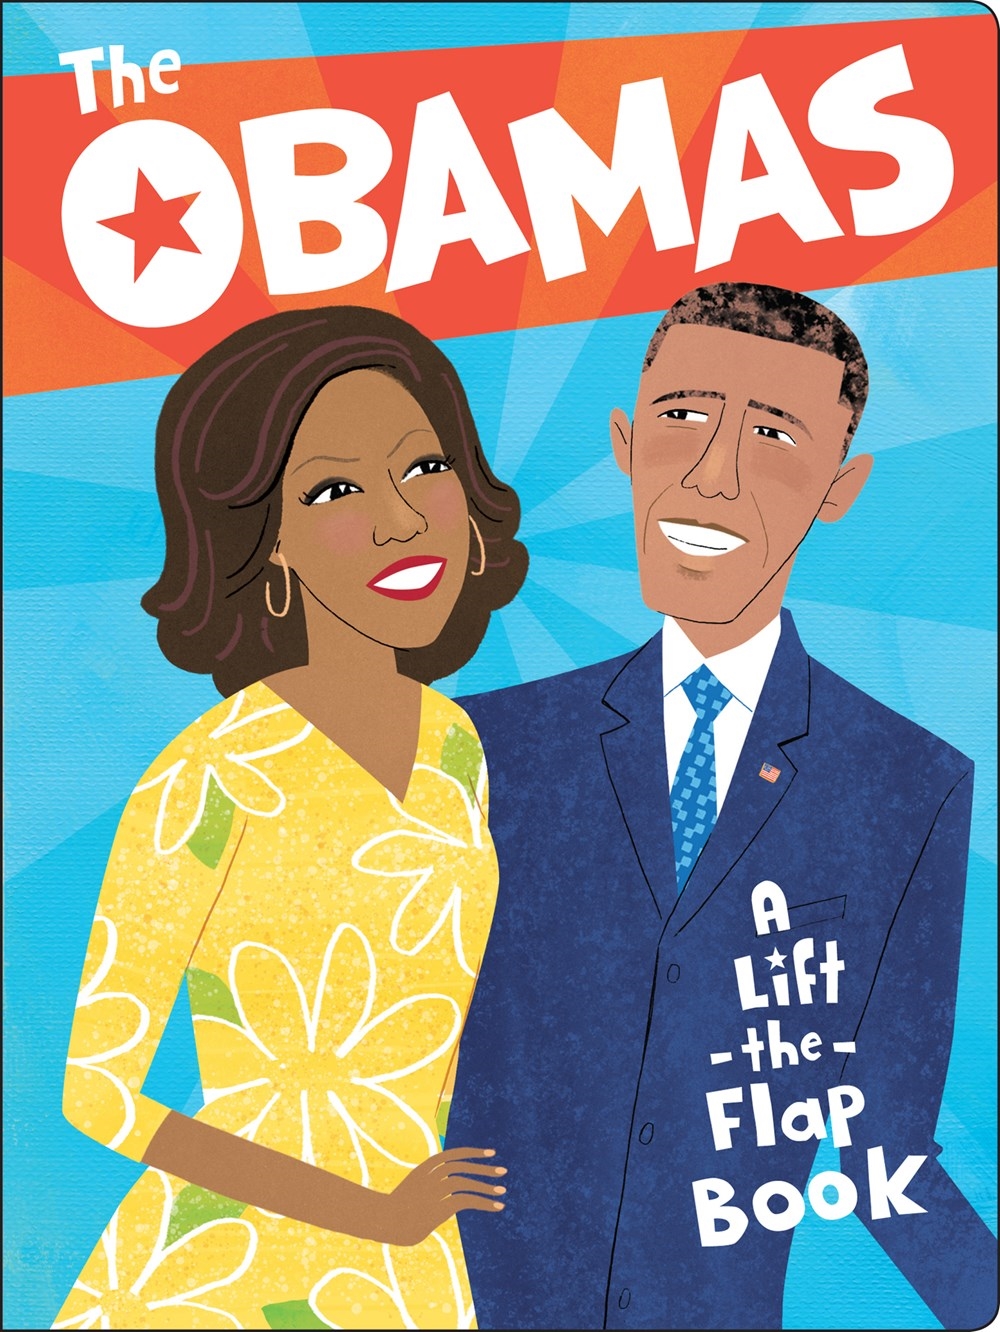 The Obamas by Violet Lemay - Penguin Books Australia